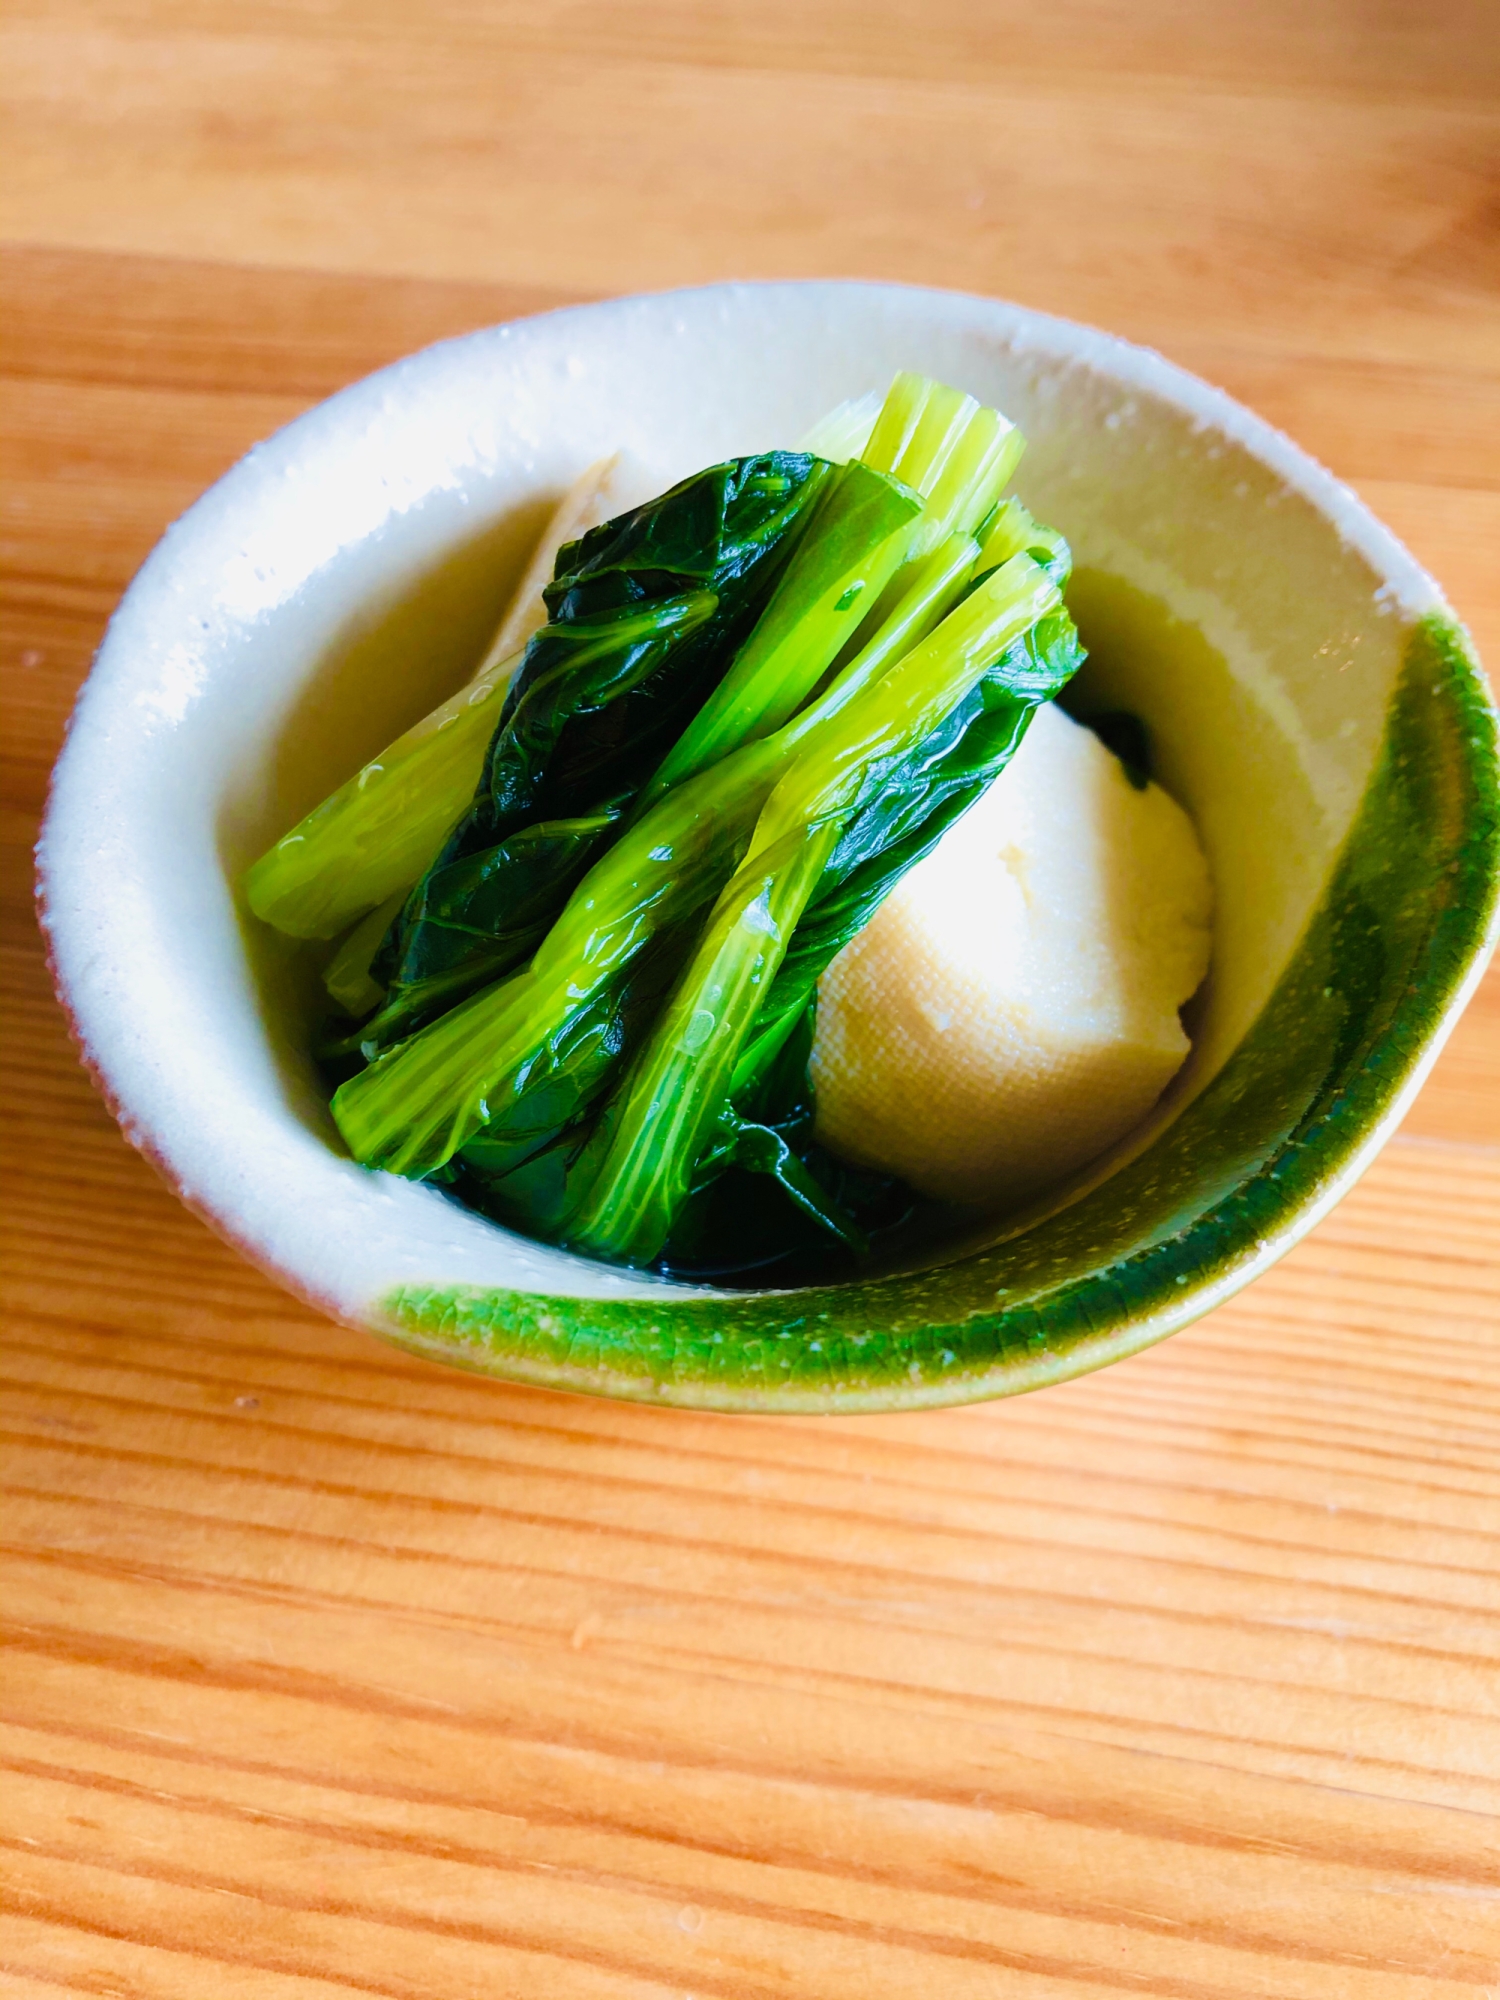 小松菜と豆腐煮物